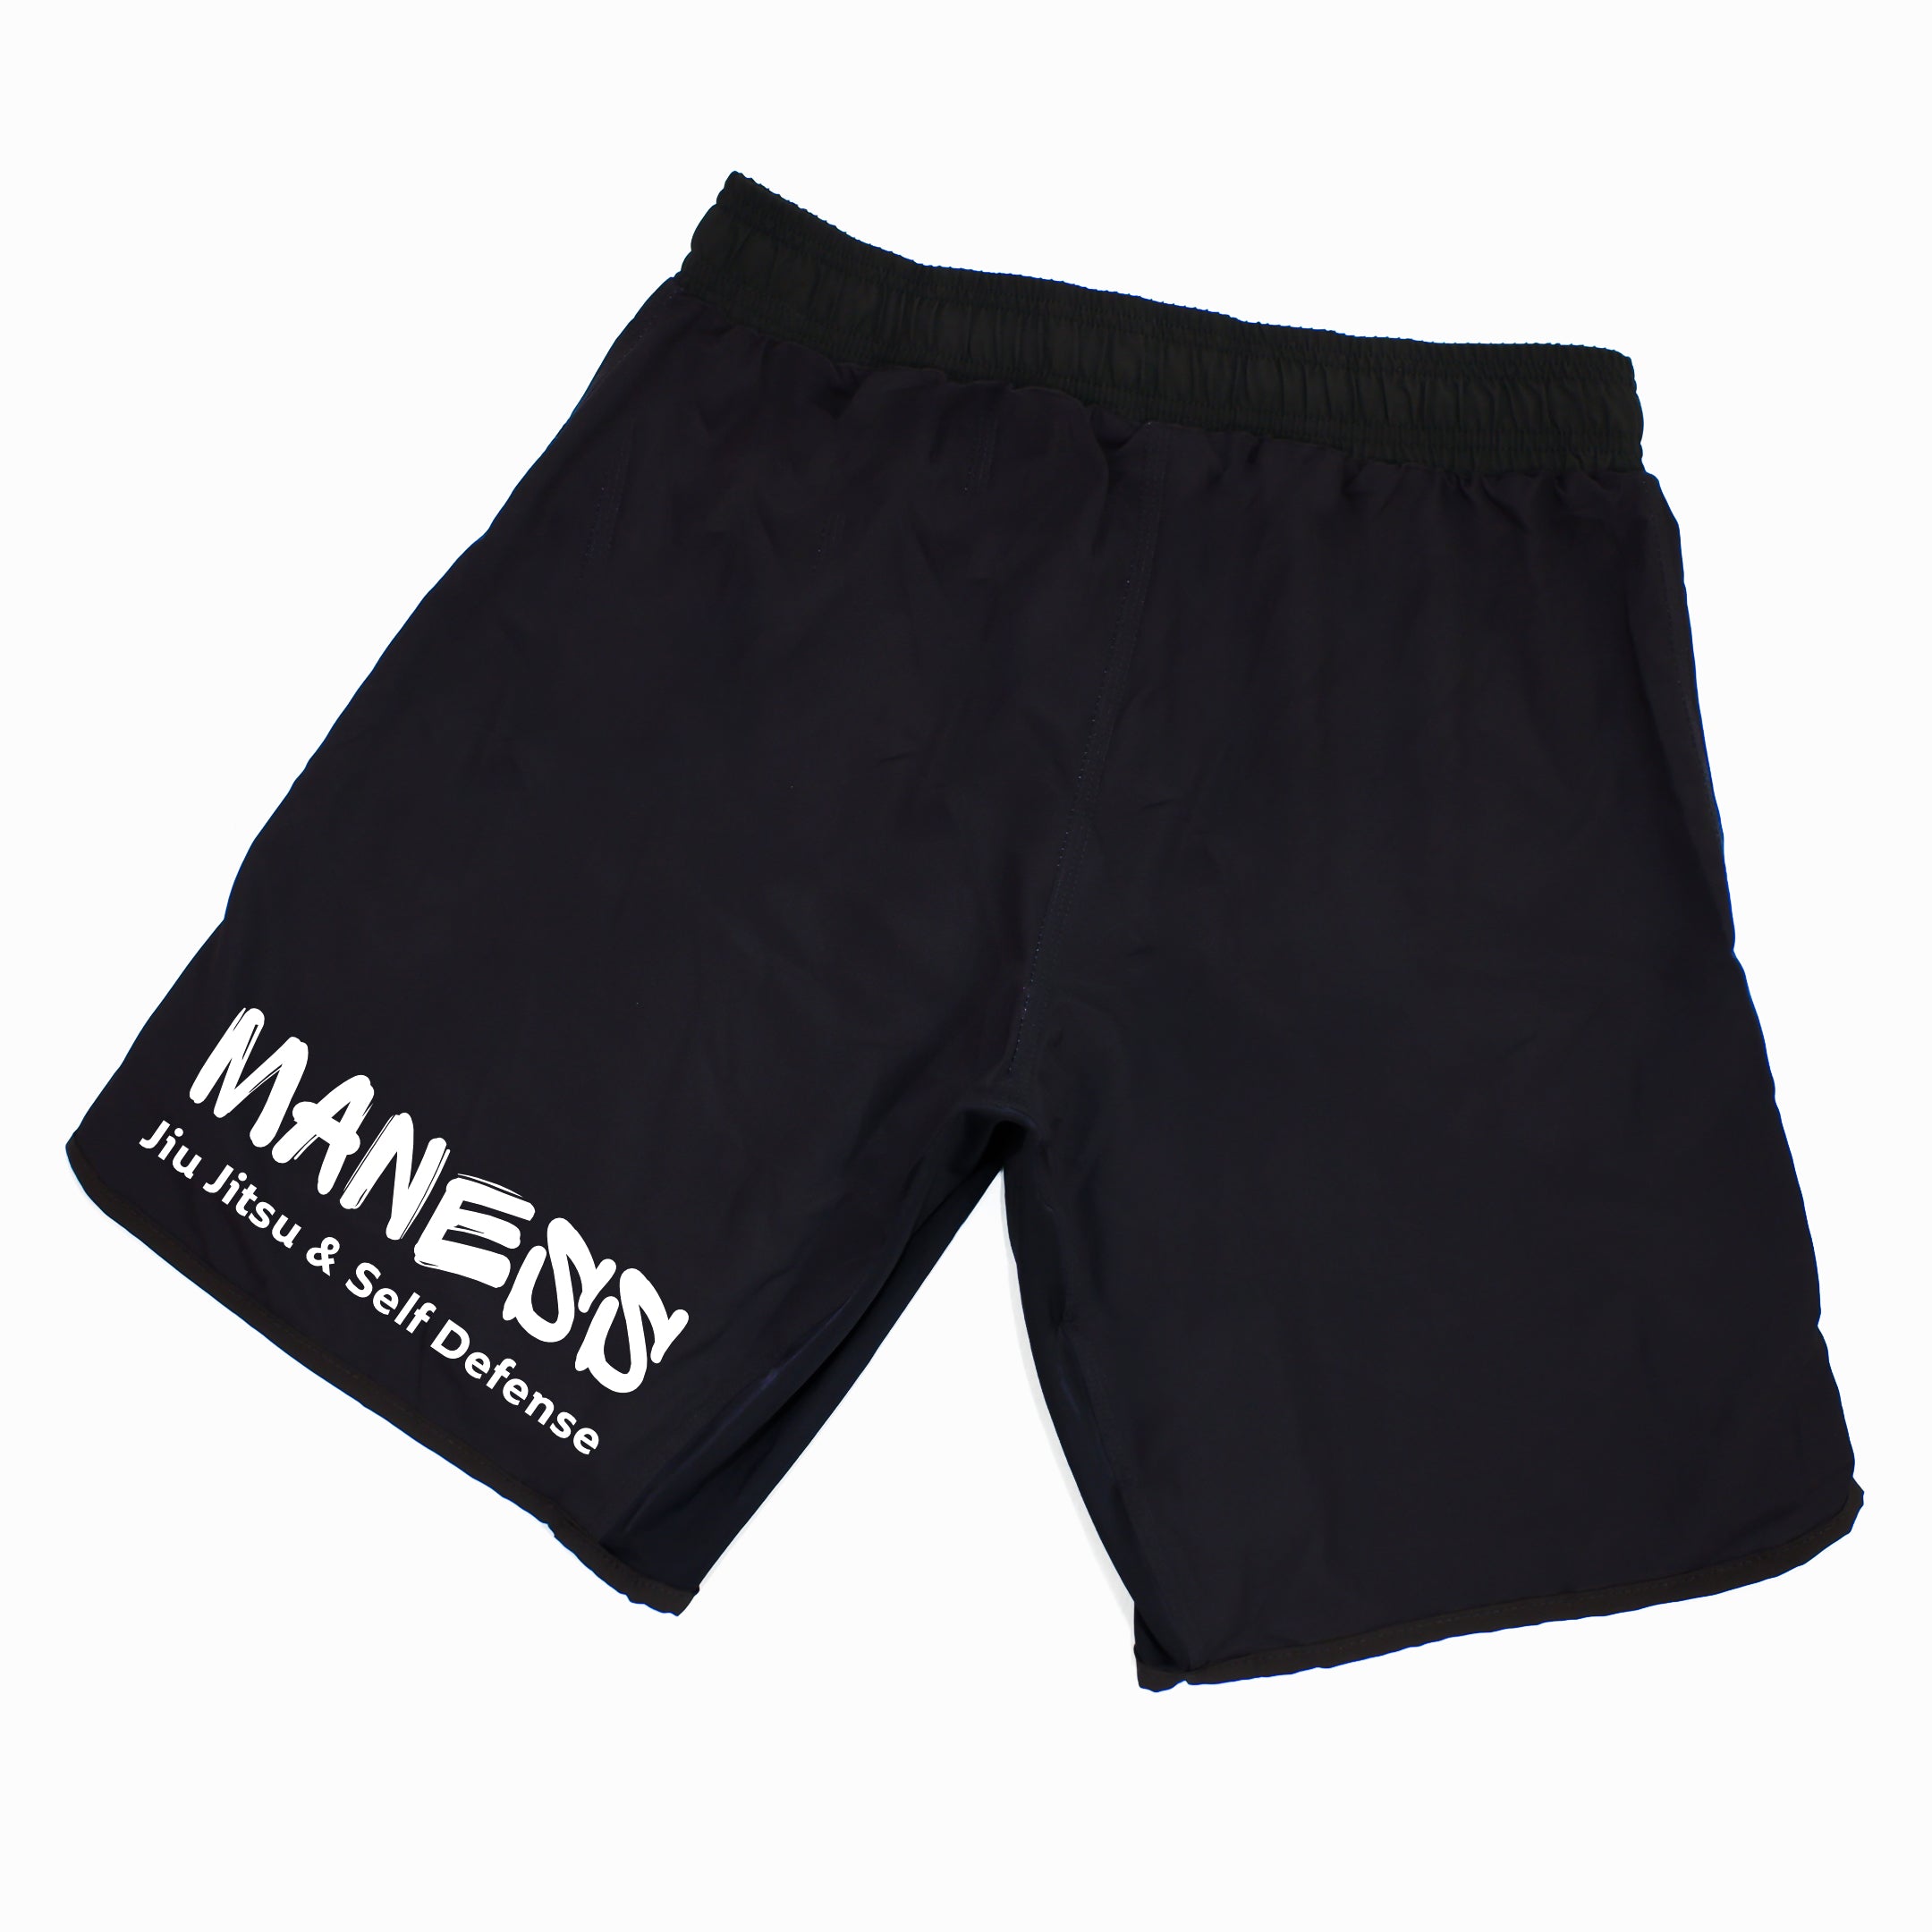 Maness Jiu Jitsu Grappling Shorts